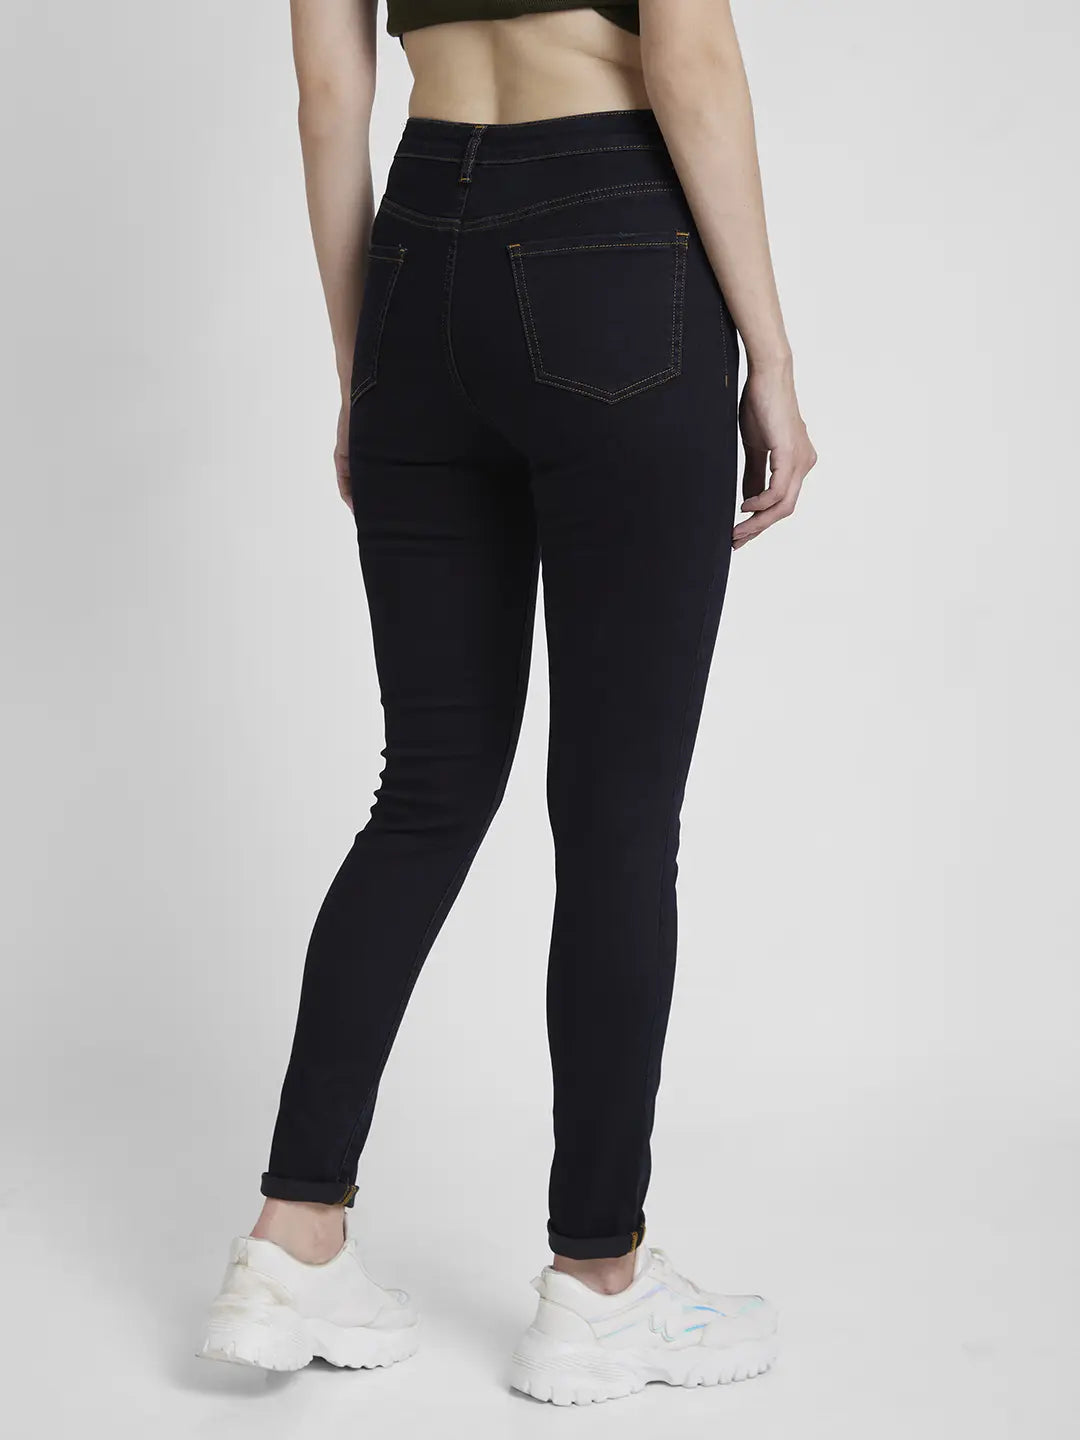 Spykar Women Dark Blue Lycra Skinny Fit Regular Length Clean Look Jeans -(Adora)